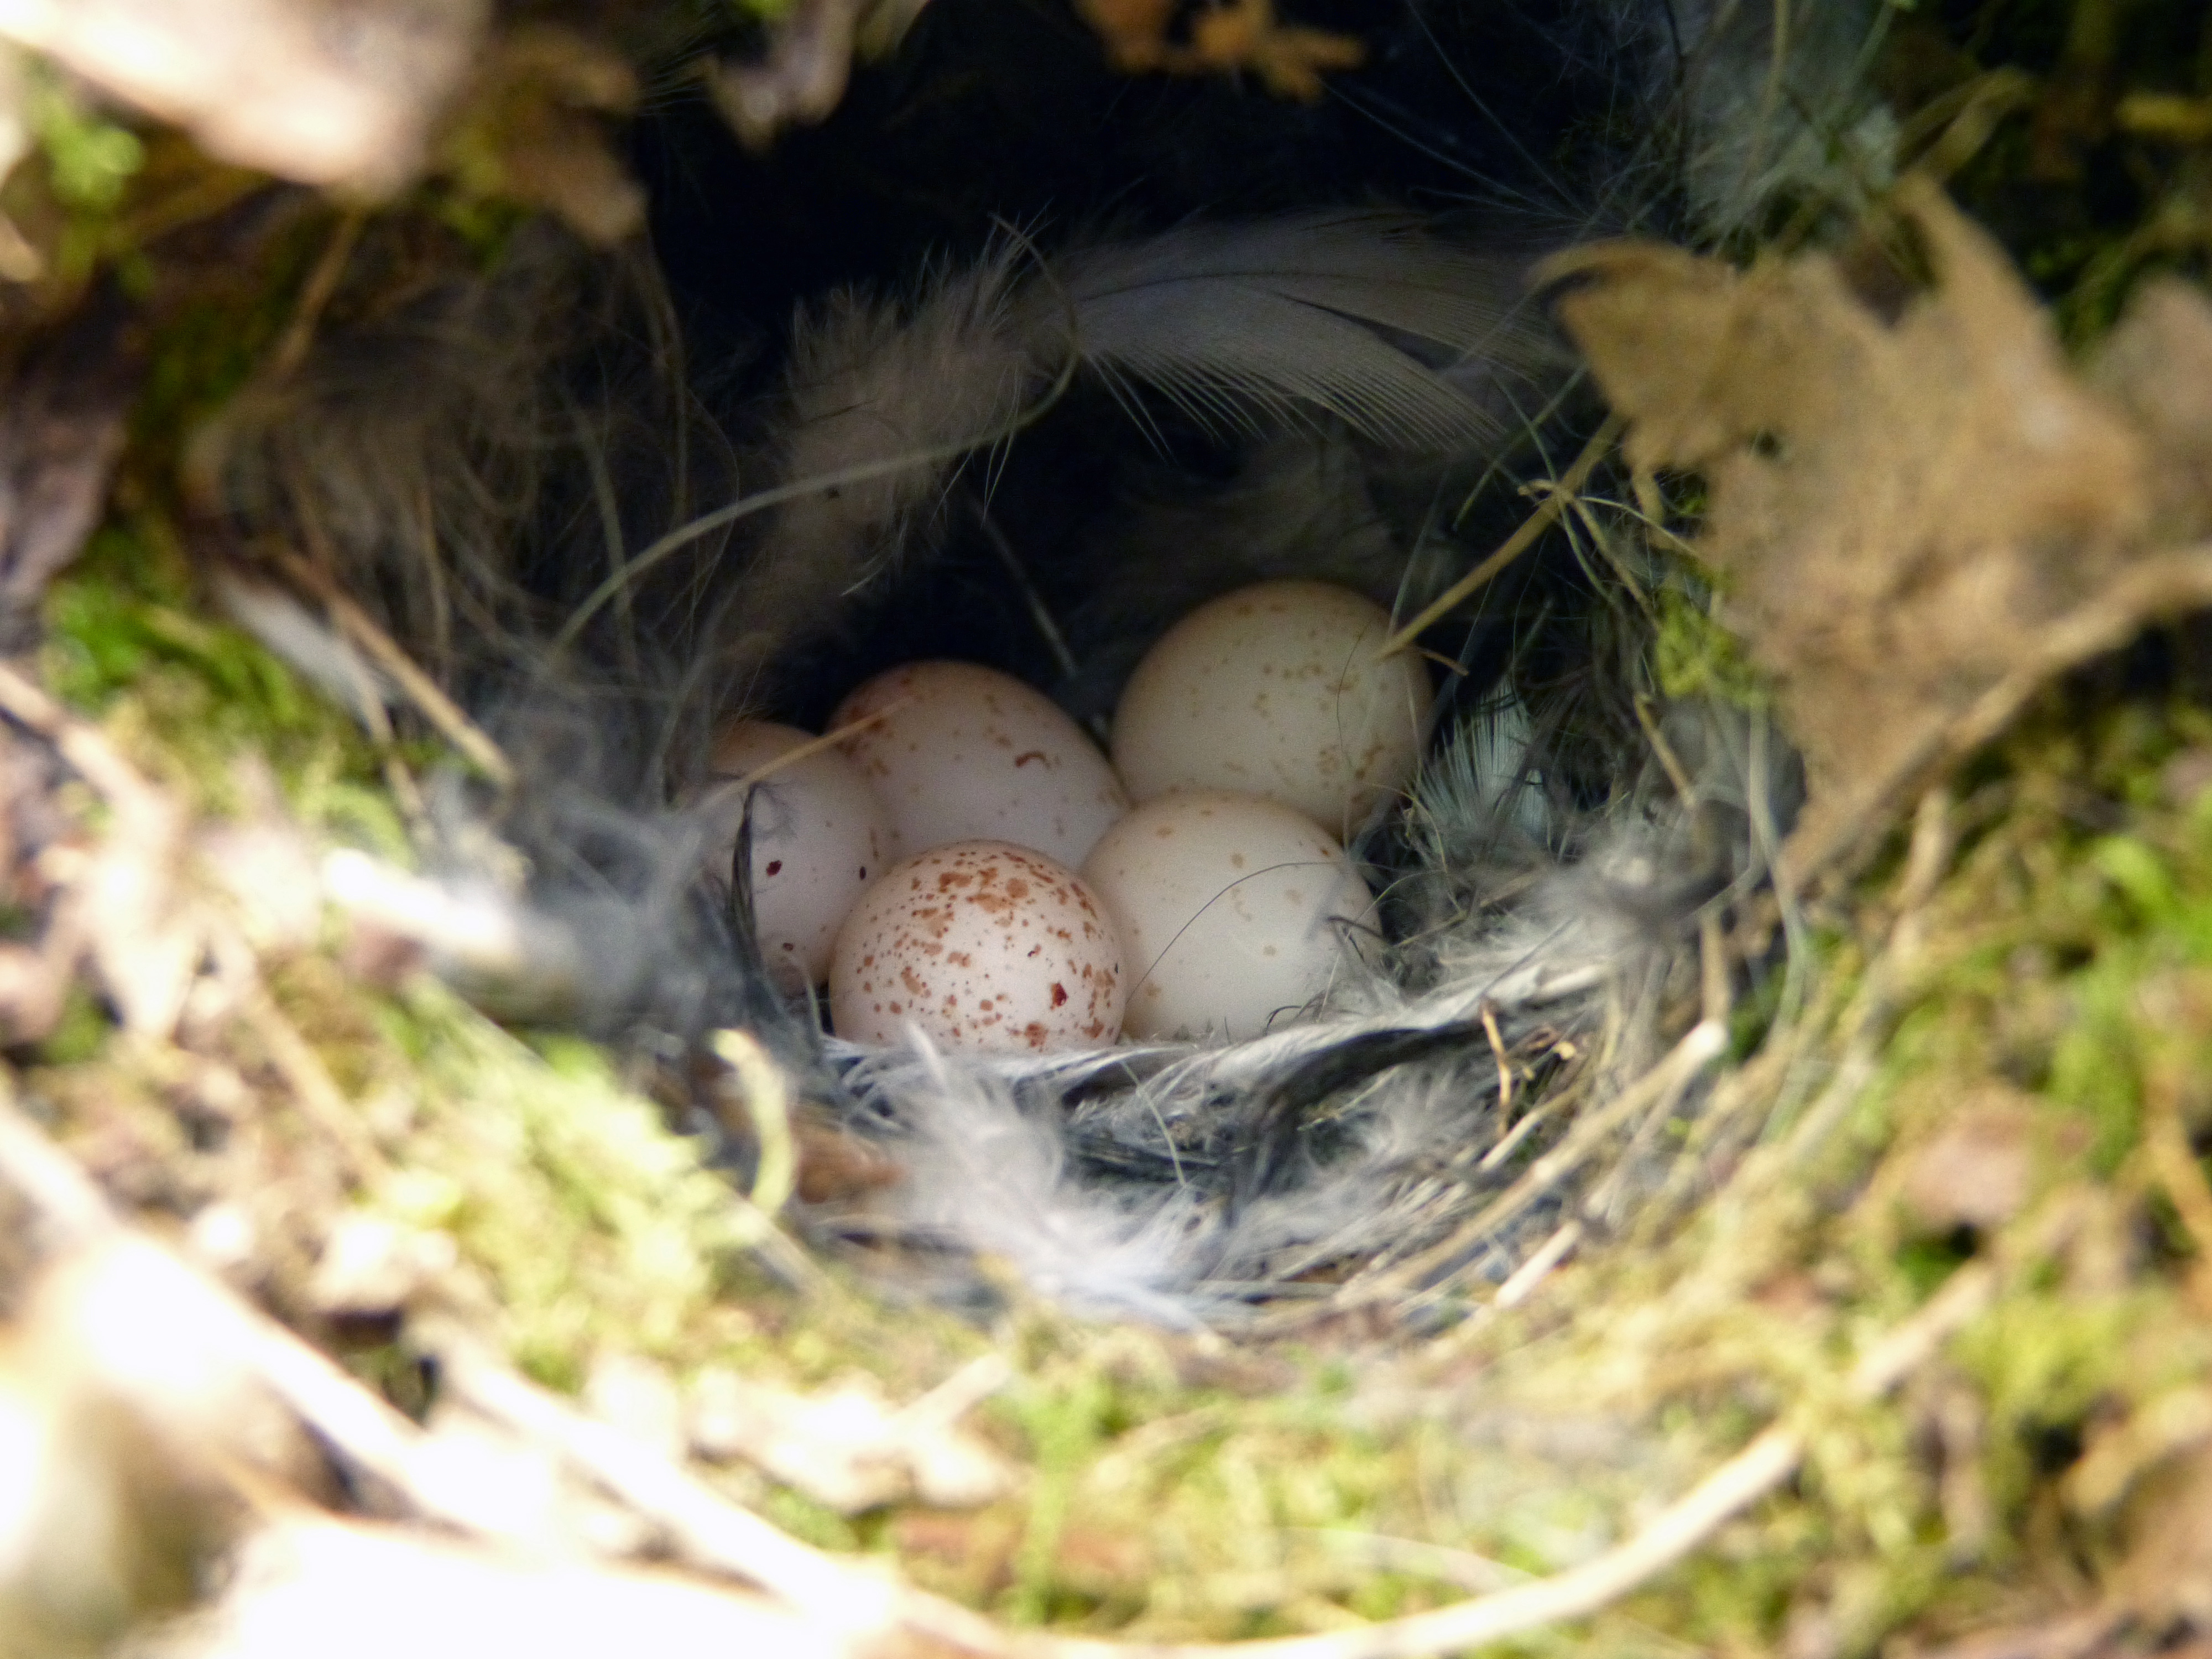 Deter predators from accessing bird nests